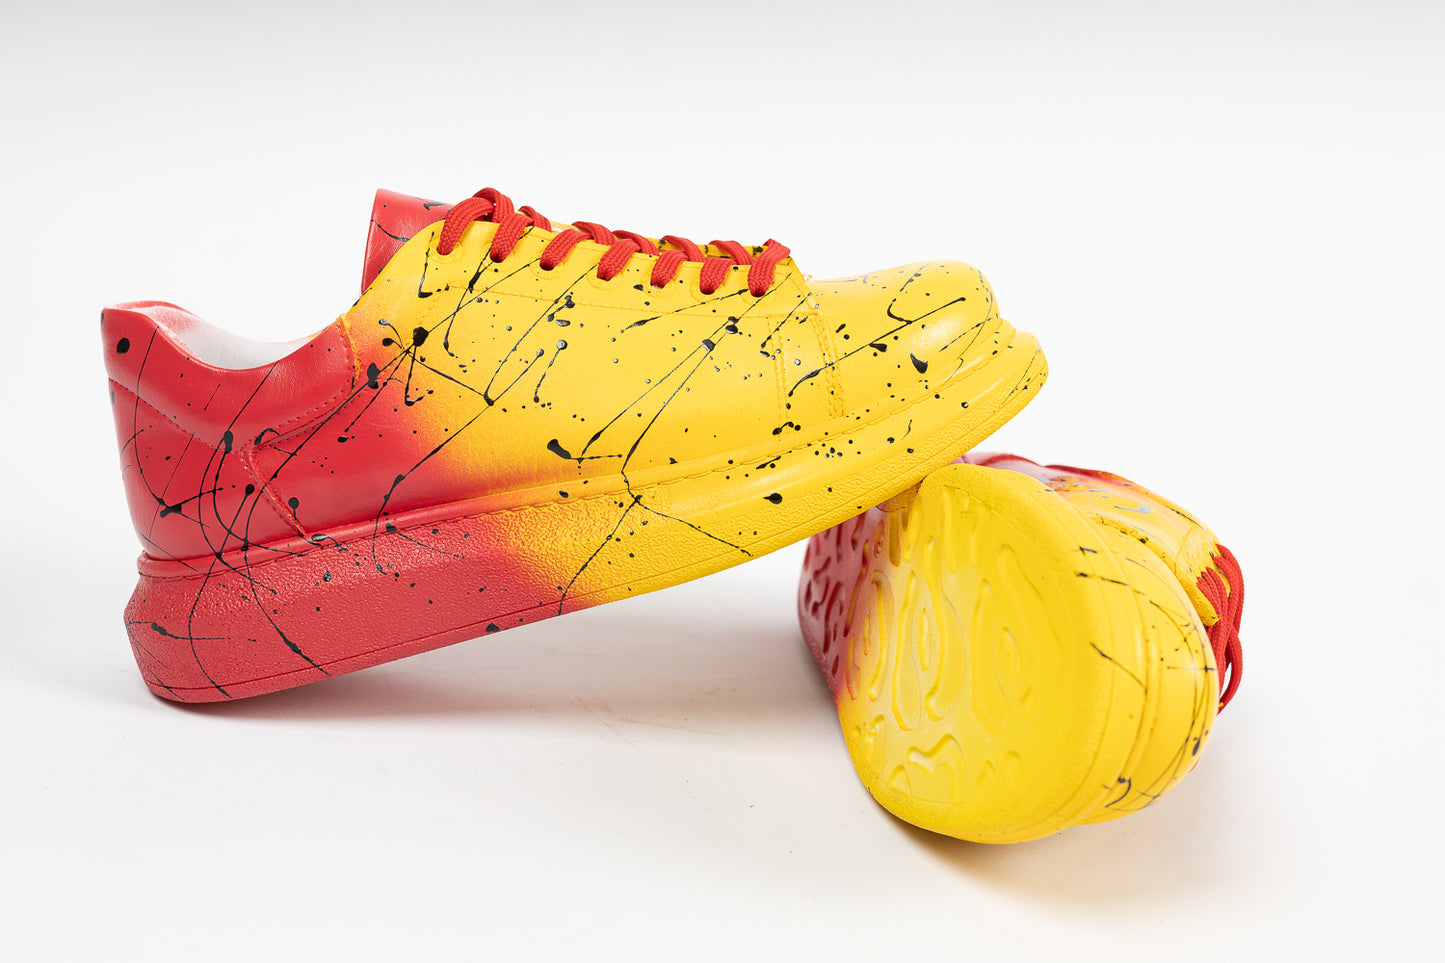 Rain X Red Yellow - Swagg Splash Sneakers